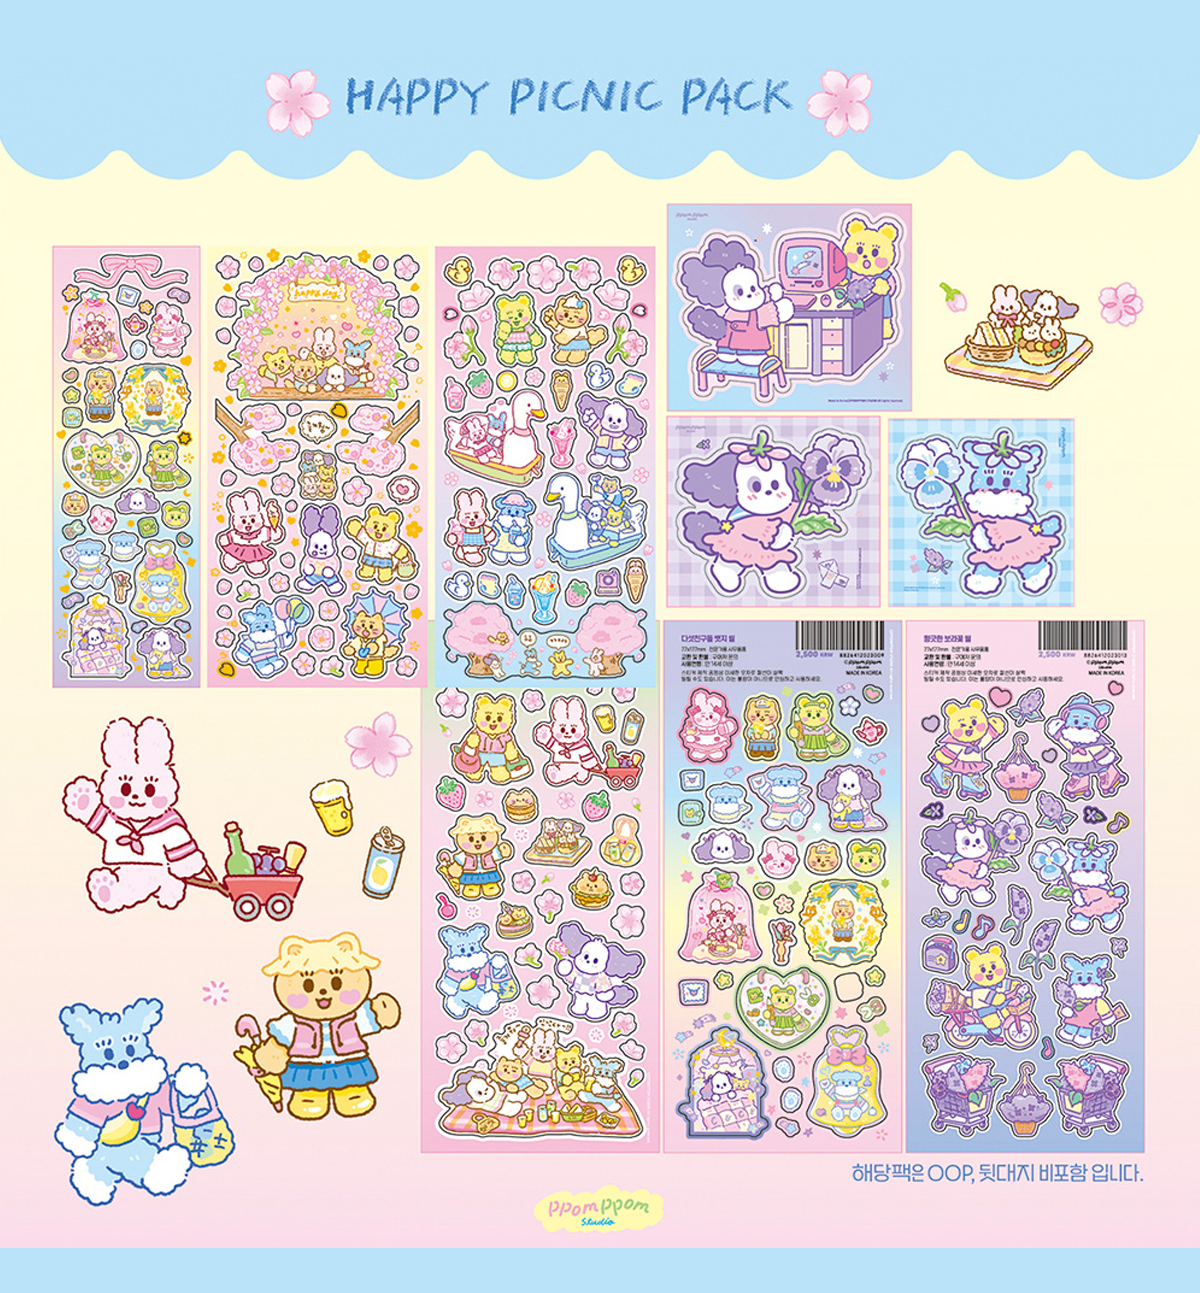 Happy Picnic Pack [9 Sticker]